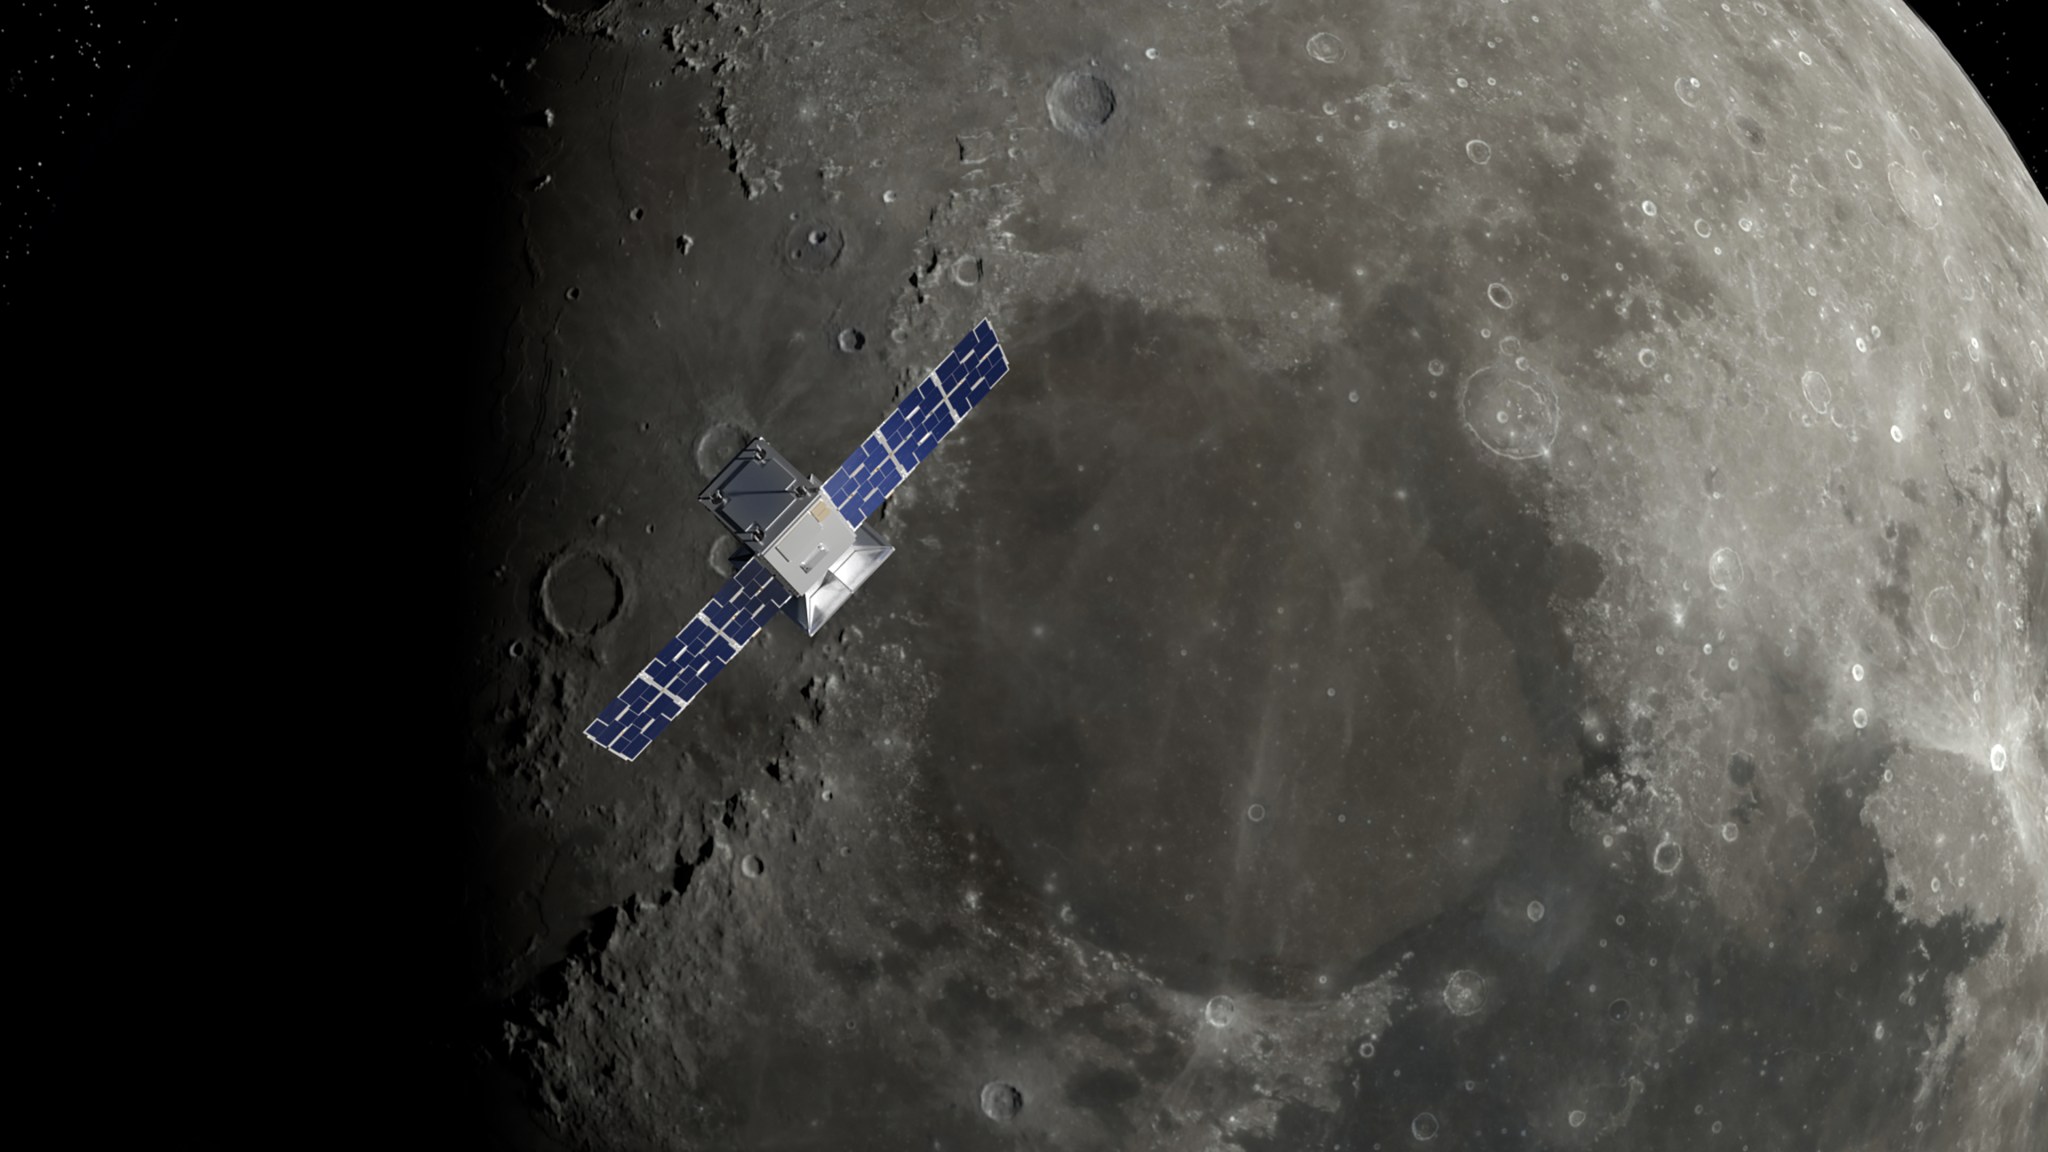 CAPSTONE over the lunar North Pole